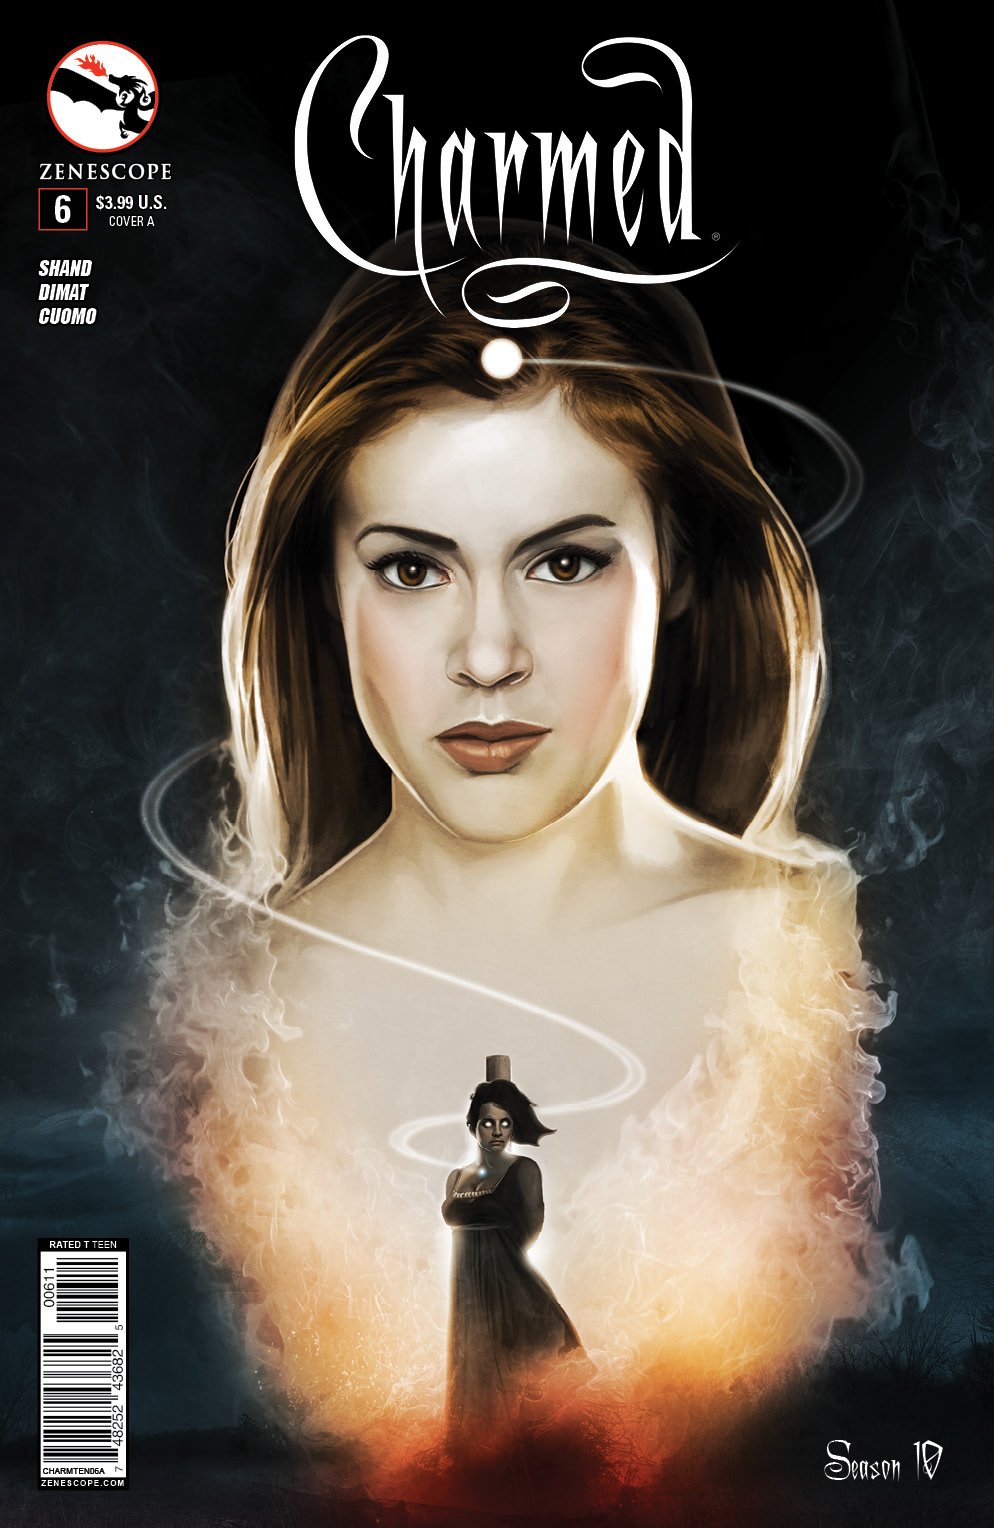 Charmed season 10 comics